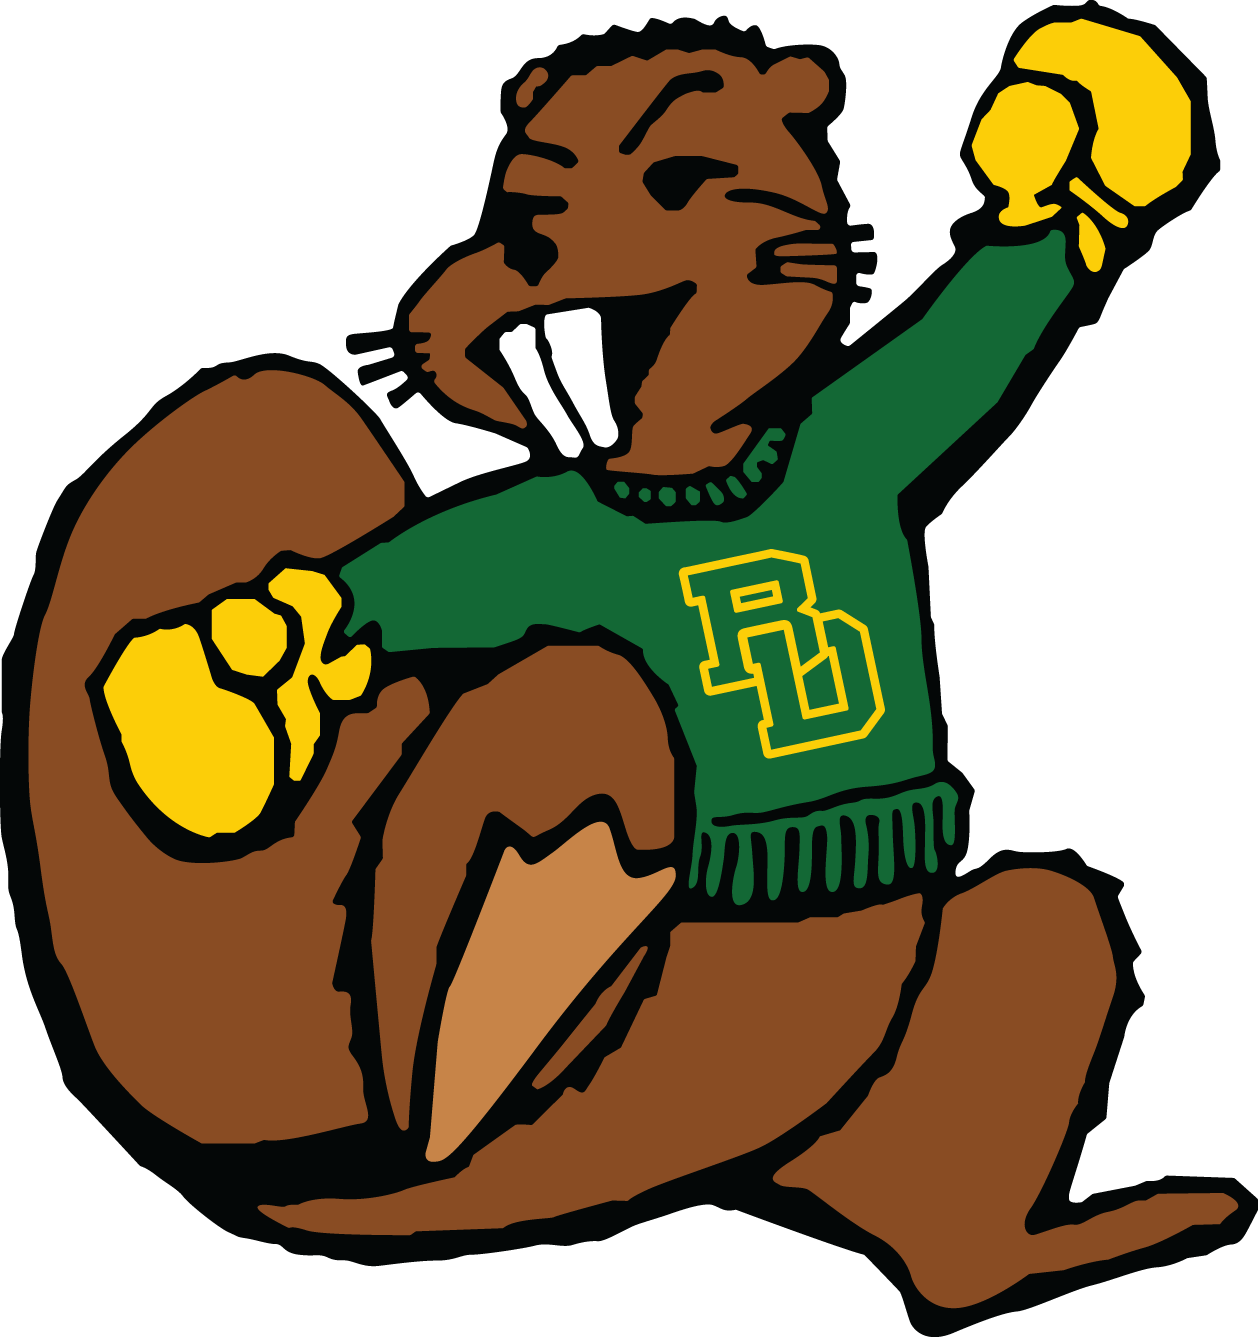 Beaver Mascot